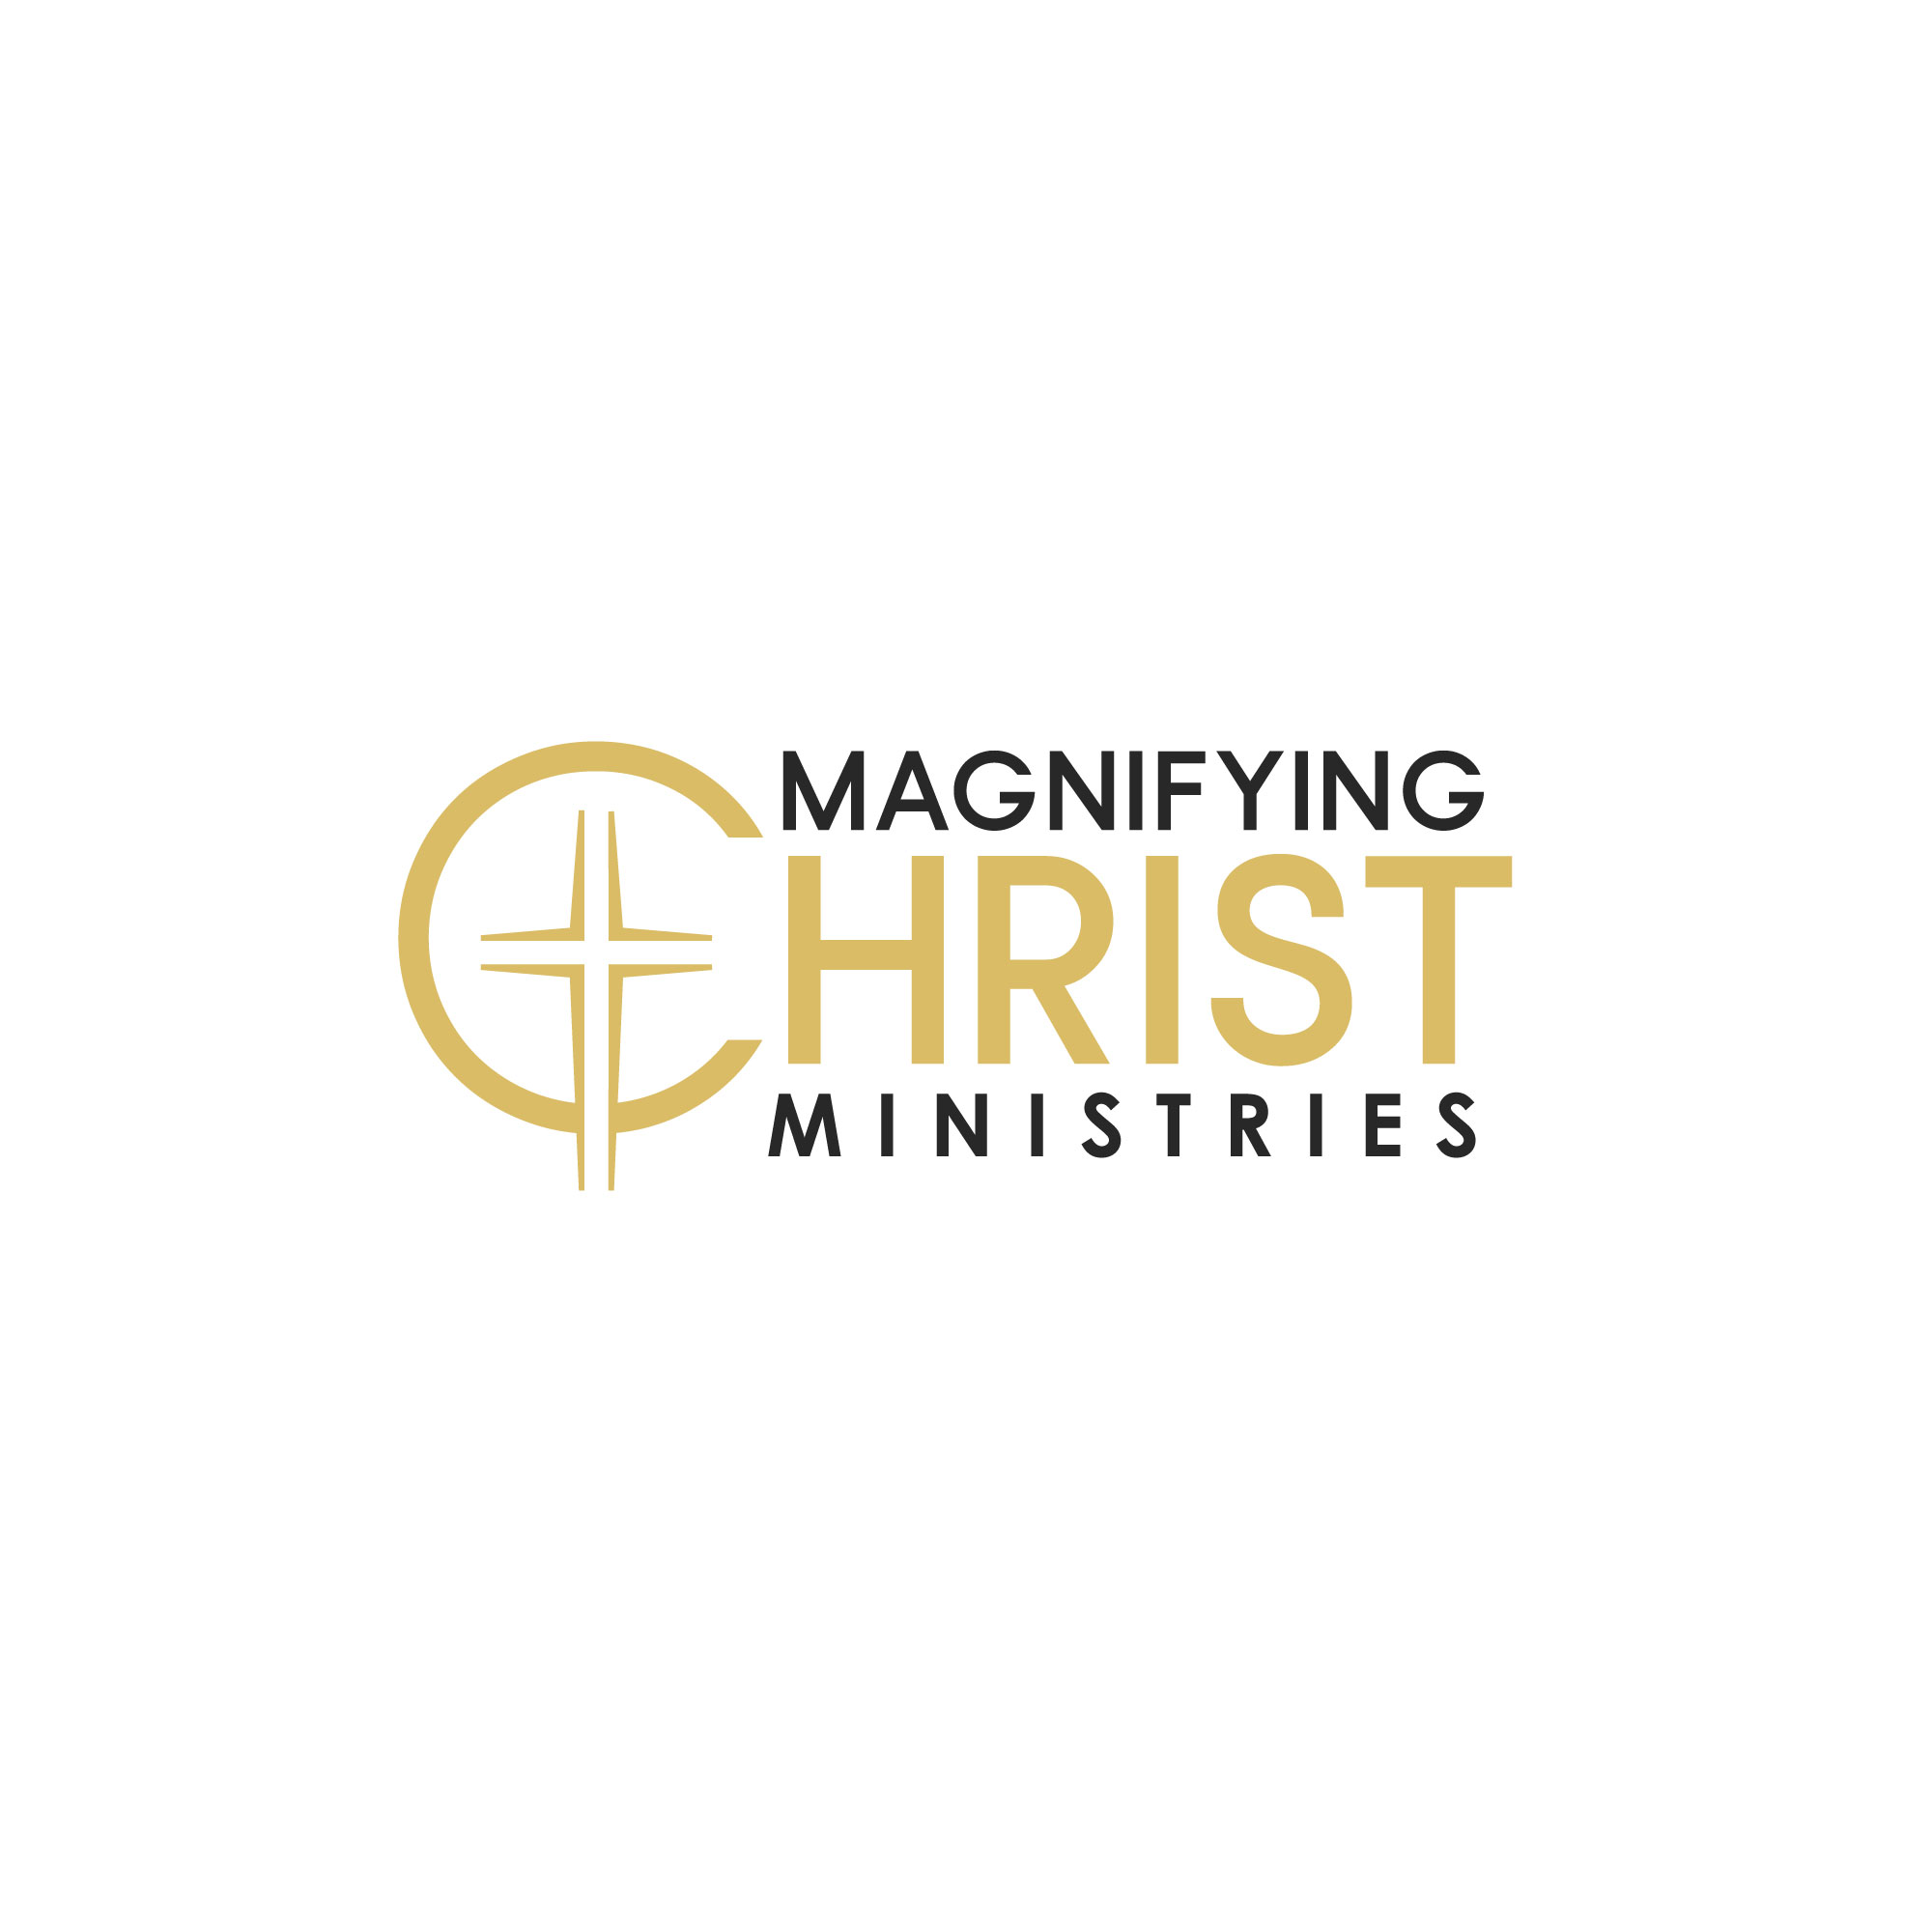 Magnifying Christ Ministries logo